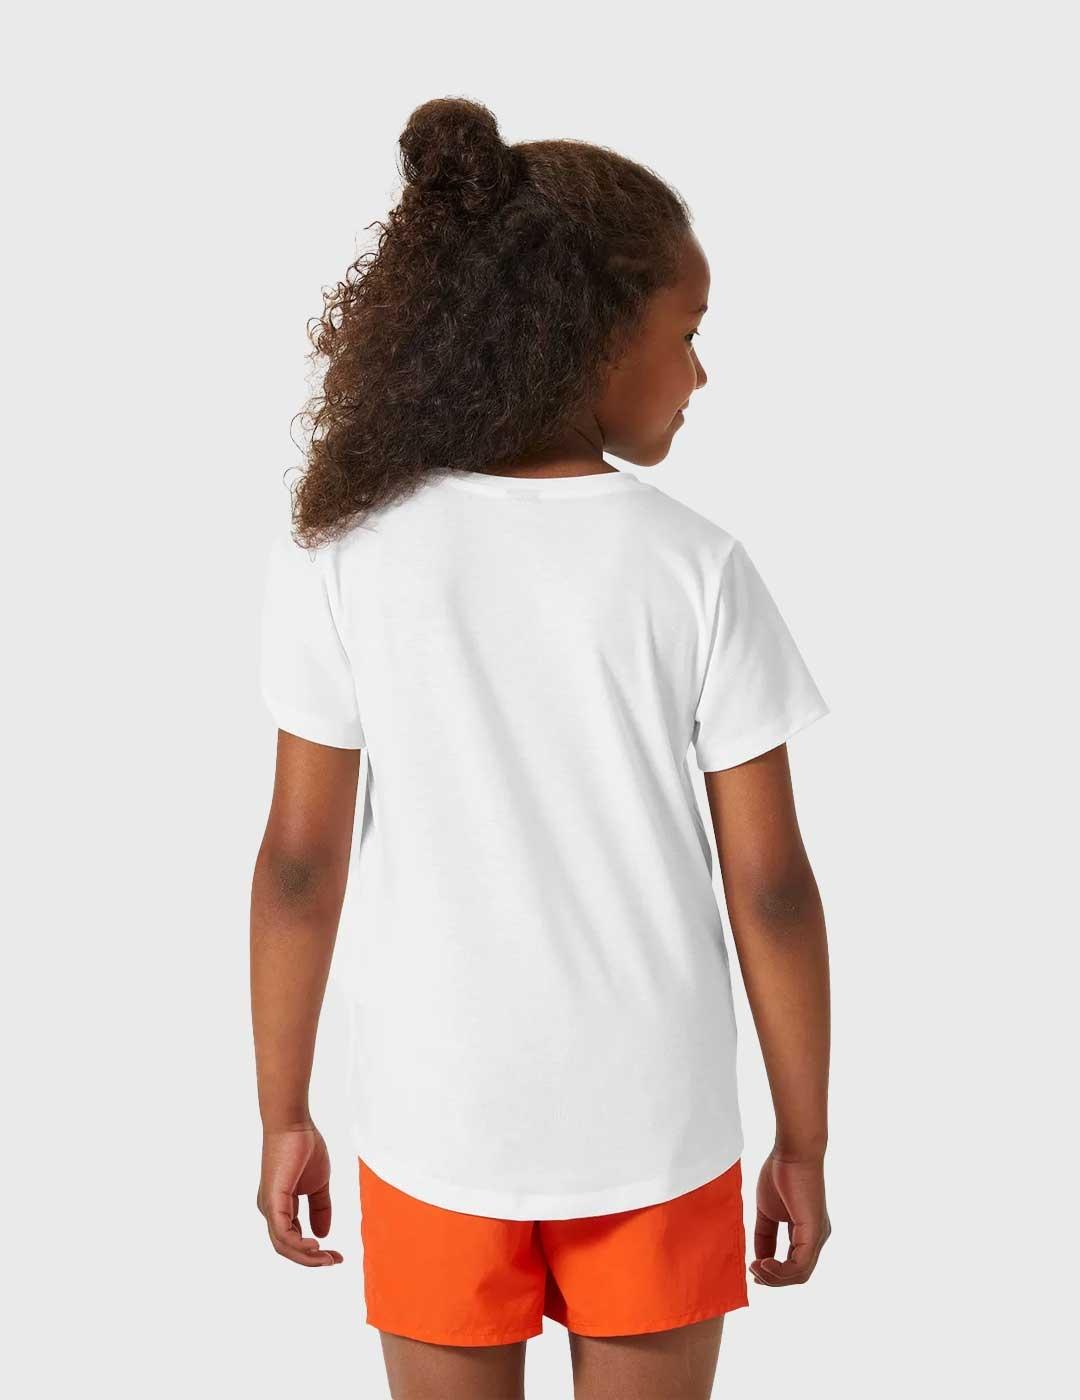 Helly Hansen Junior Allure Camiseta infantil blanca